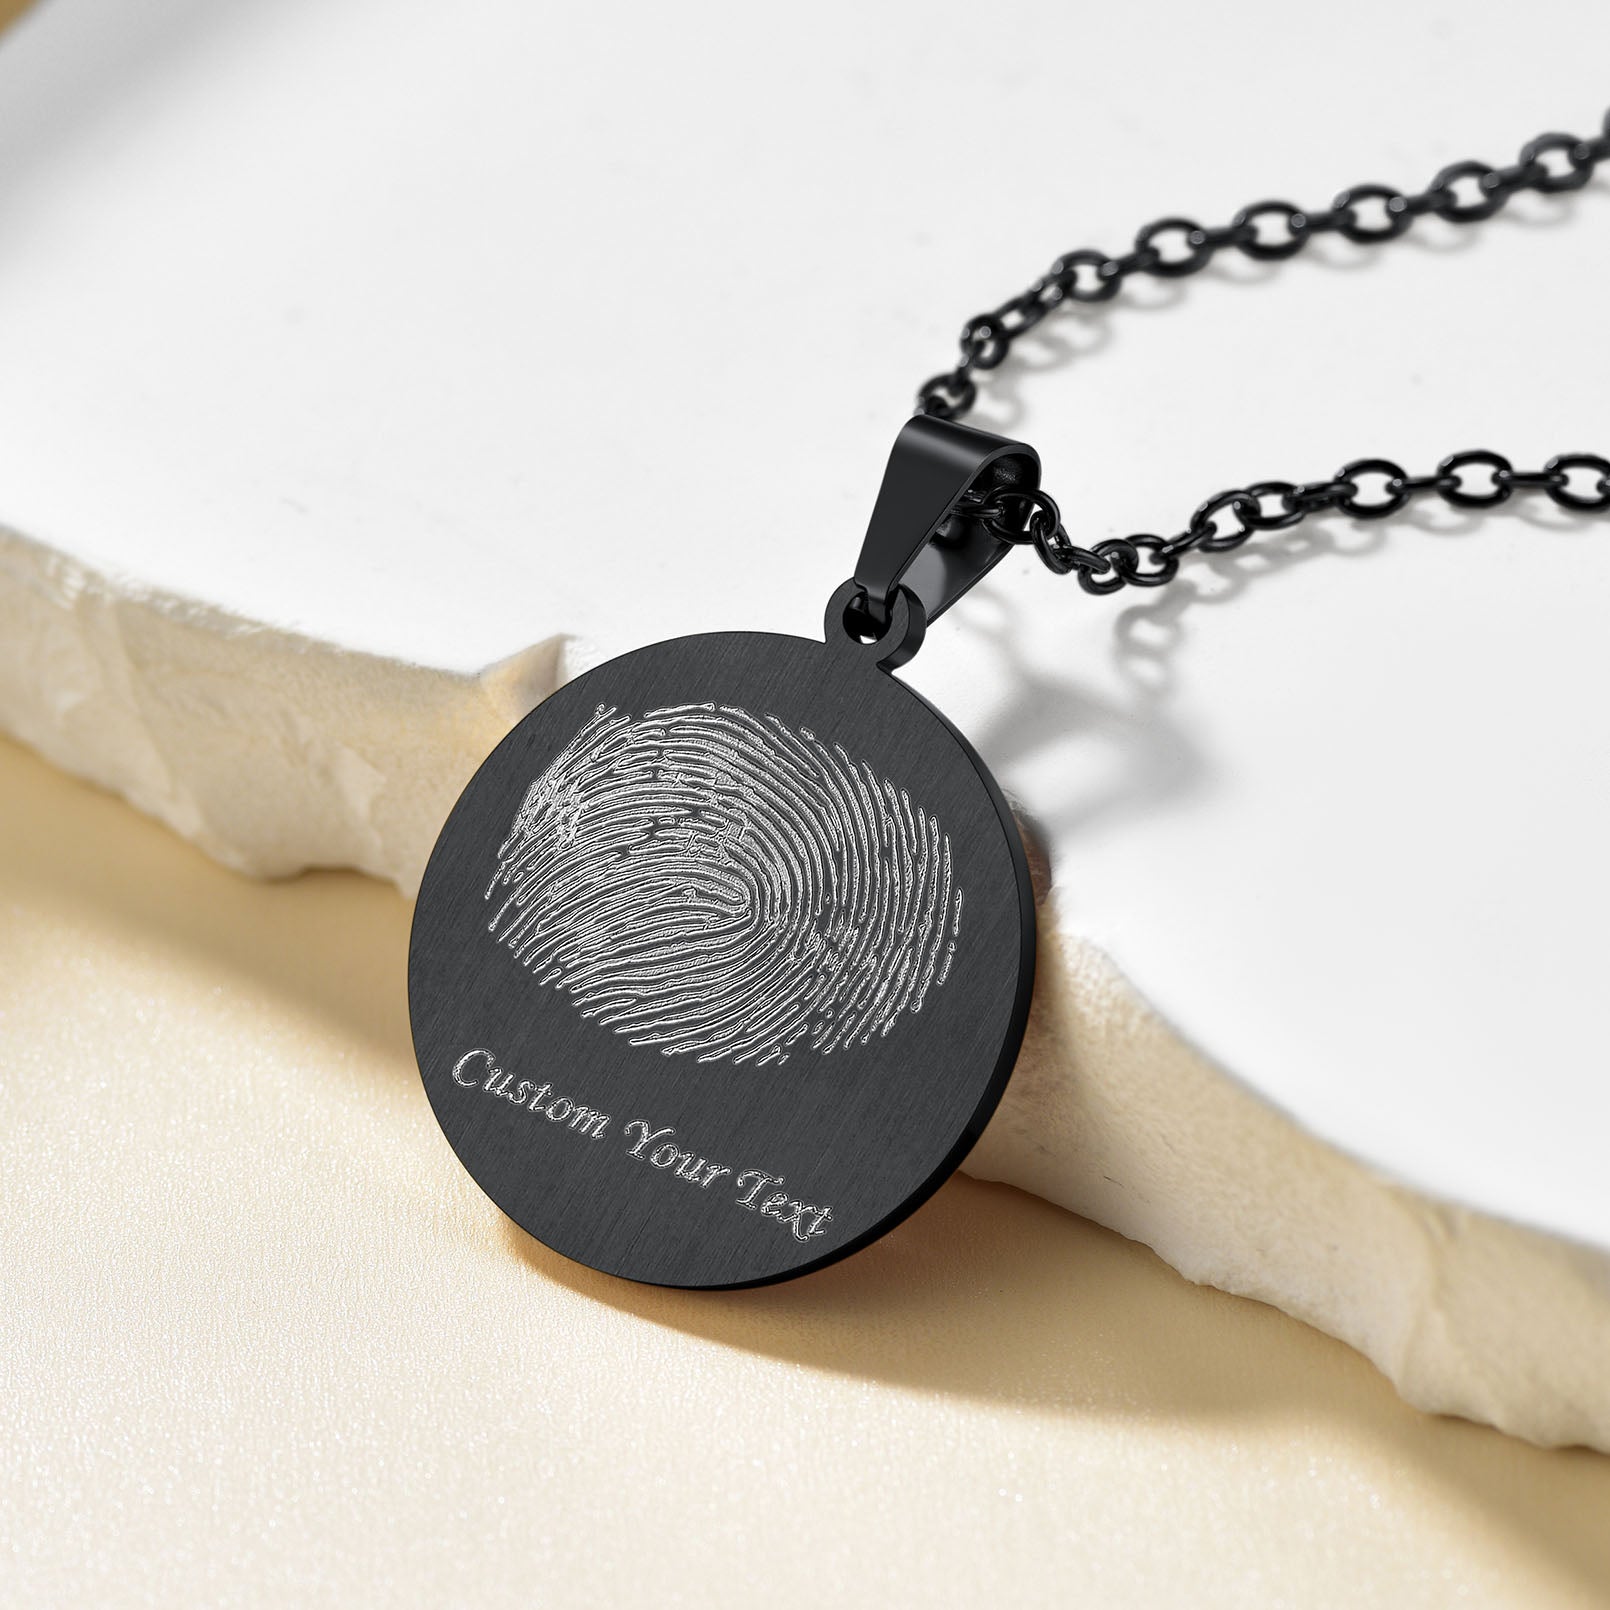 Customized Photo Fingerprint Round Pendant Necklace FaithHeart Jewelry